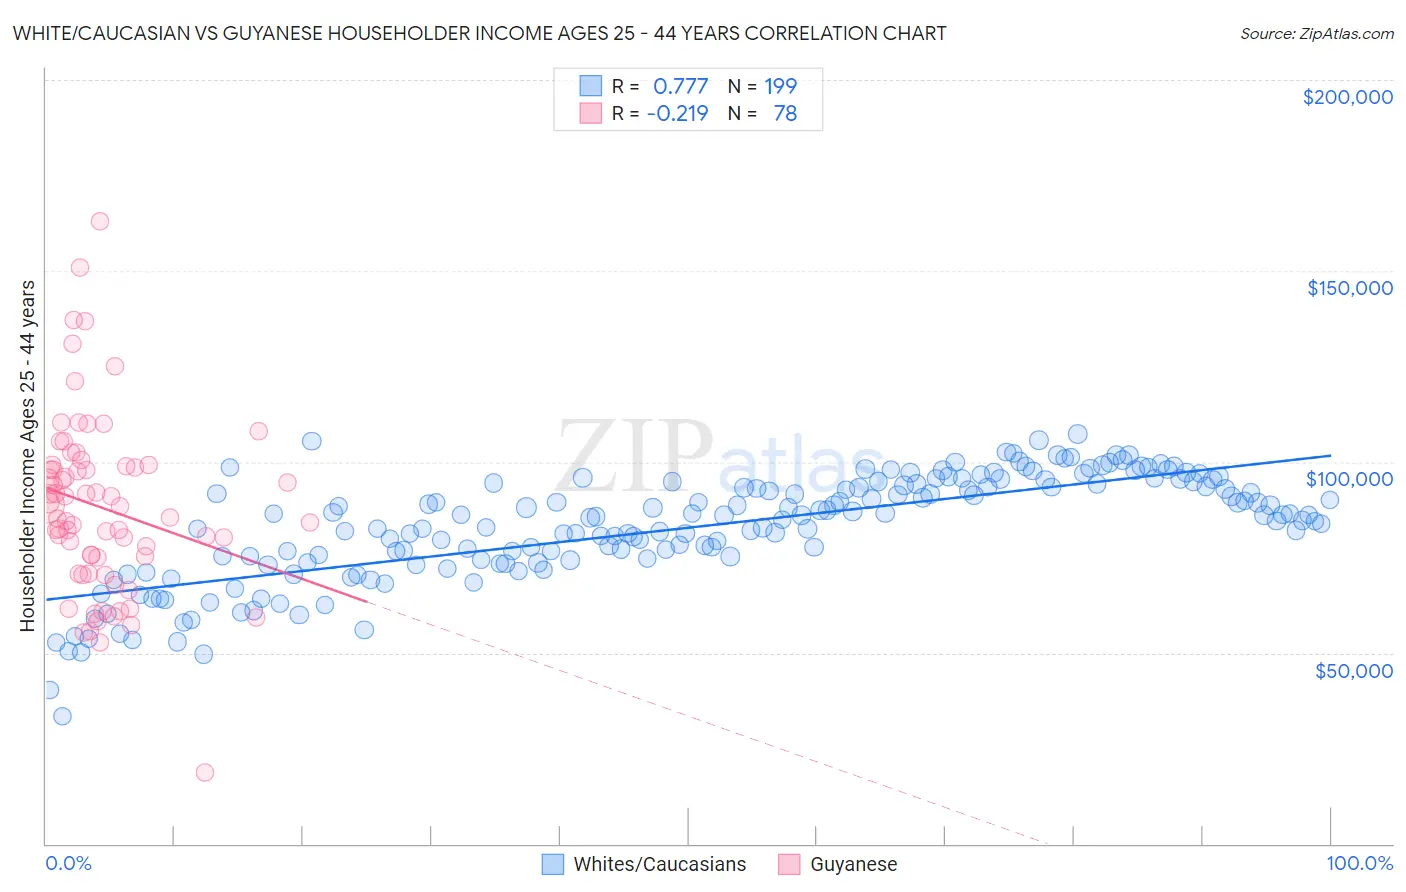 White/Caucasian vs Guyanese Householder Income Ages 25 - 44 years